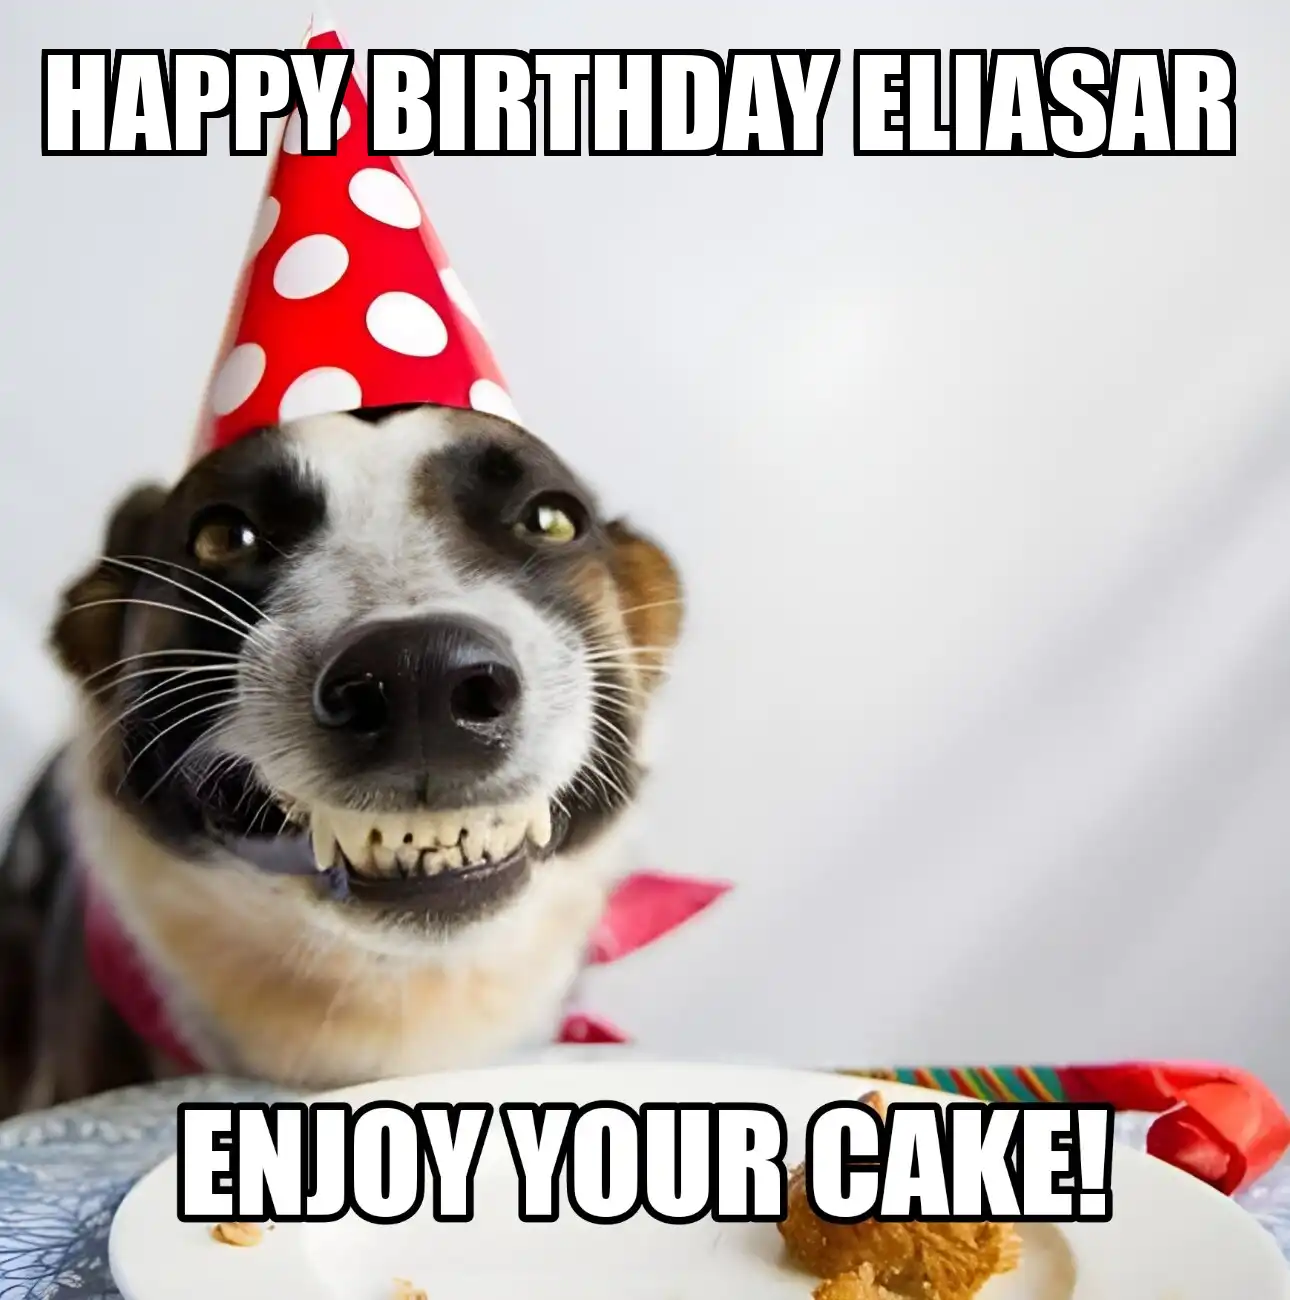 Happy Birthday Eliasar Enjoy Your Cake Dog Meme